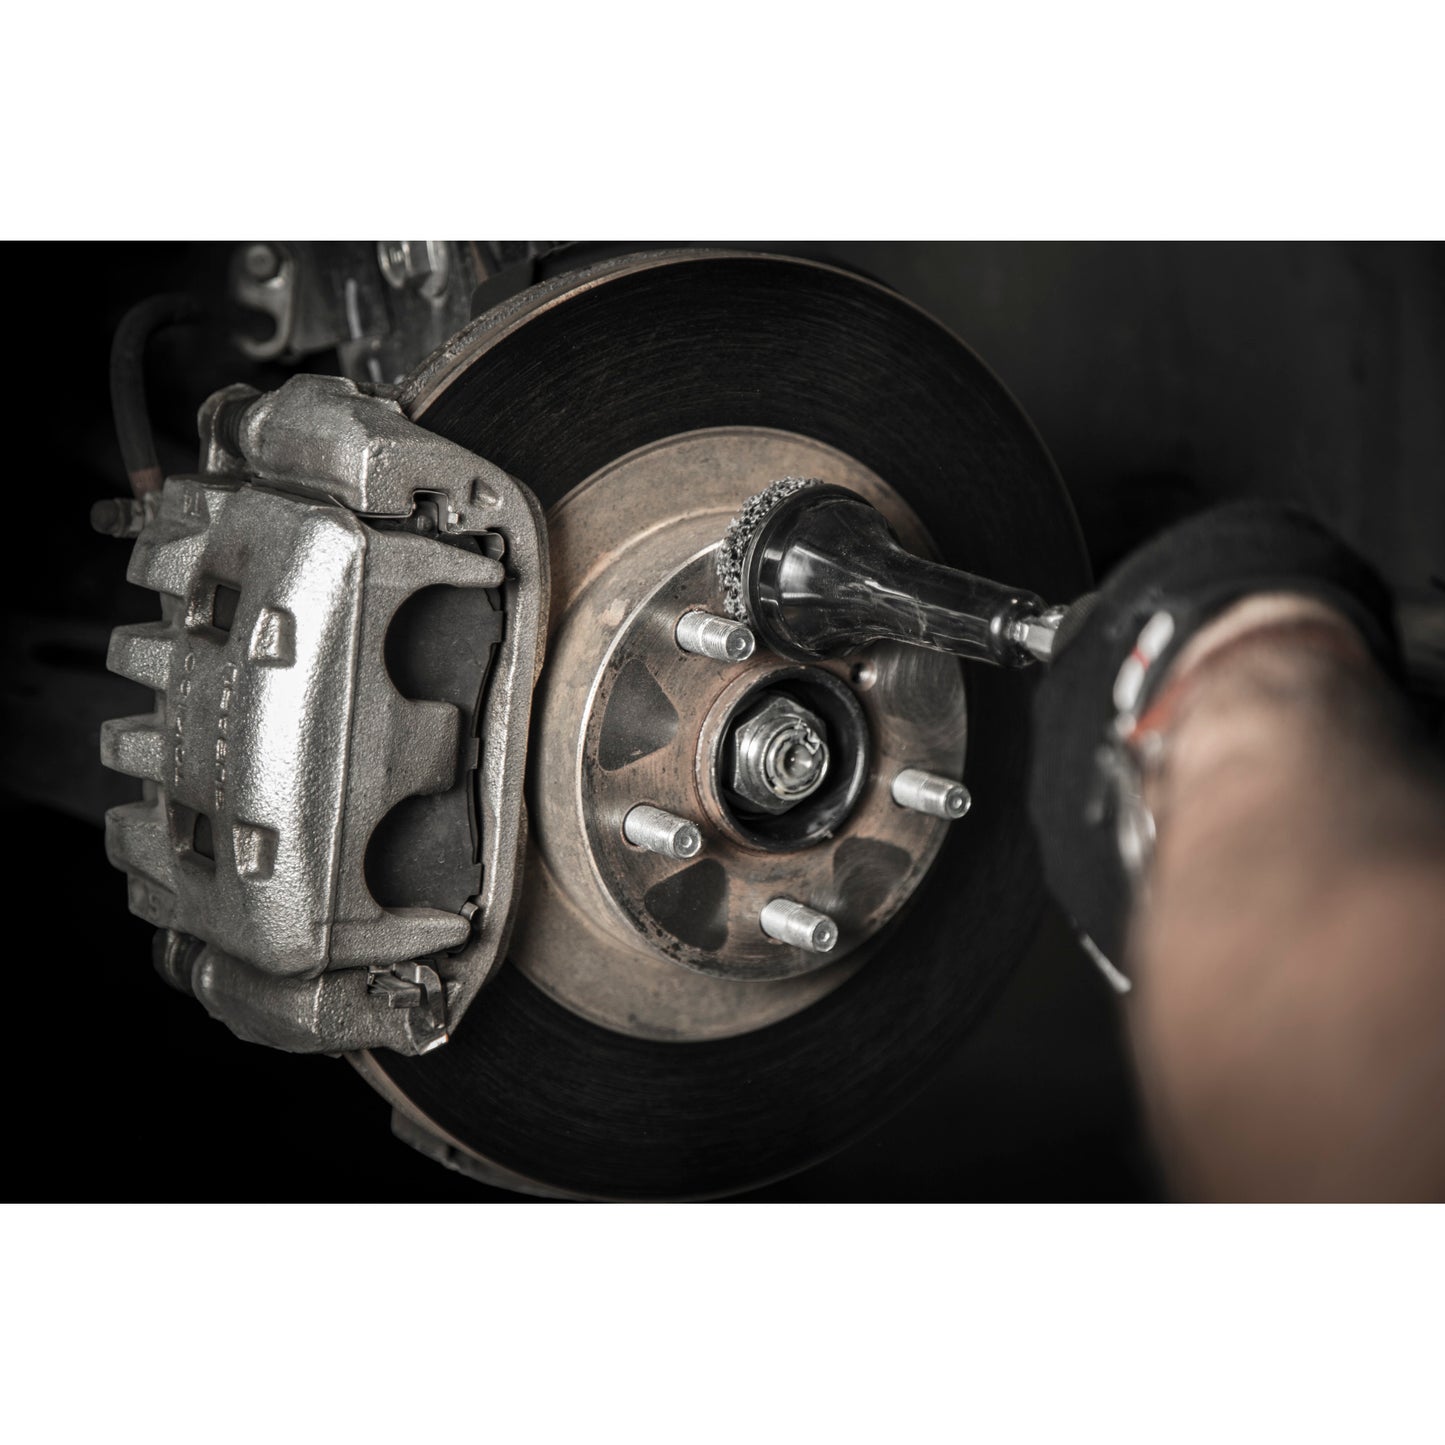 Cleaning, Polishing, and Resurfacing Kit for Wheel Hubs, Brake Rotors, and Wheel Studs